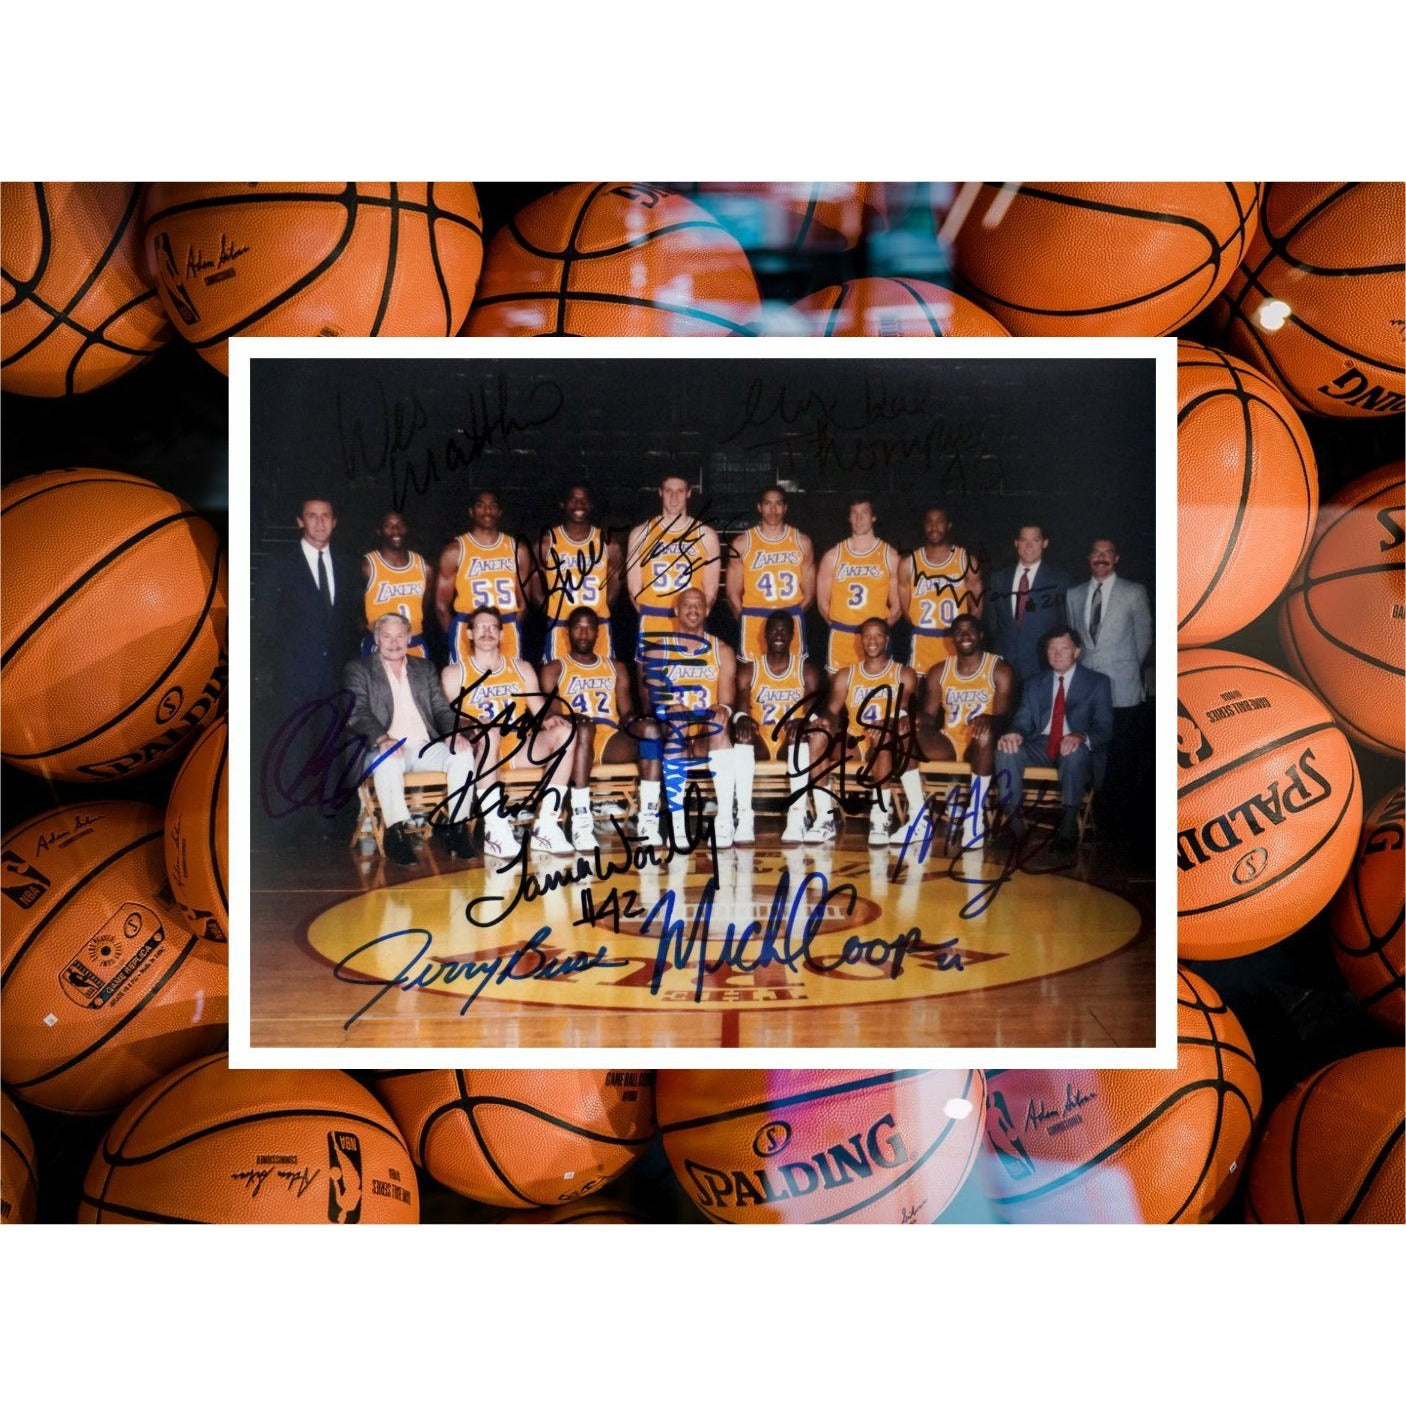 Los Angeles Lakers Pat Riley Earvin Magic Johnson James Worthy Kareem Abdul-Jabbar team signed 8 x 10 photo